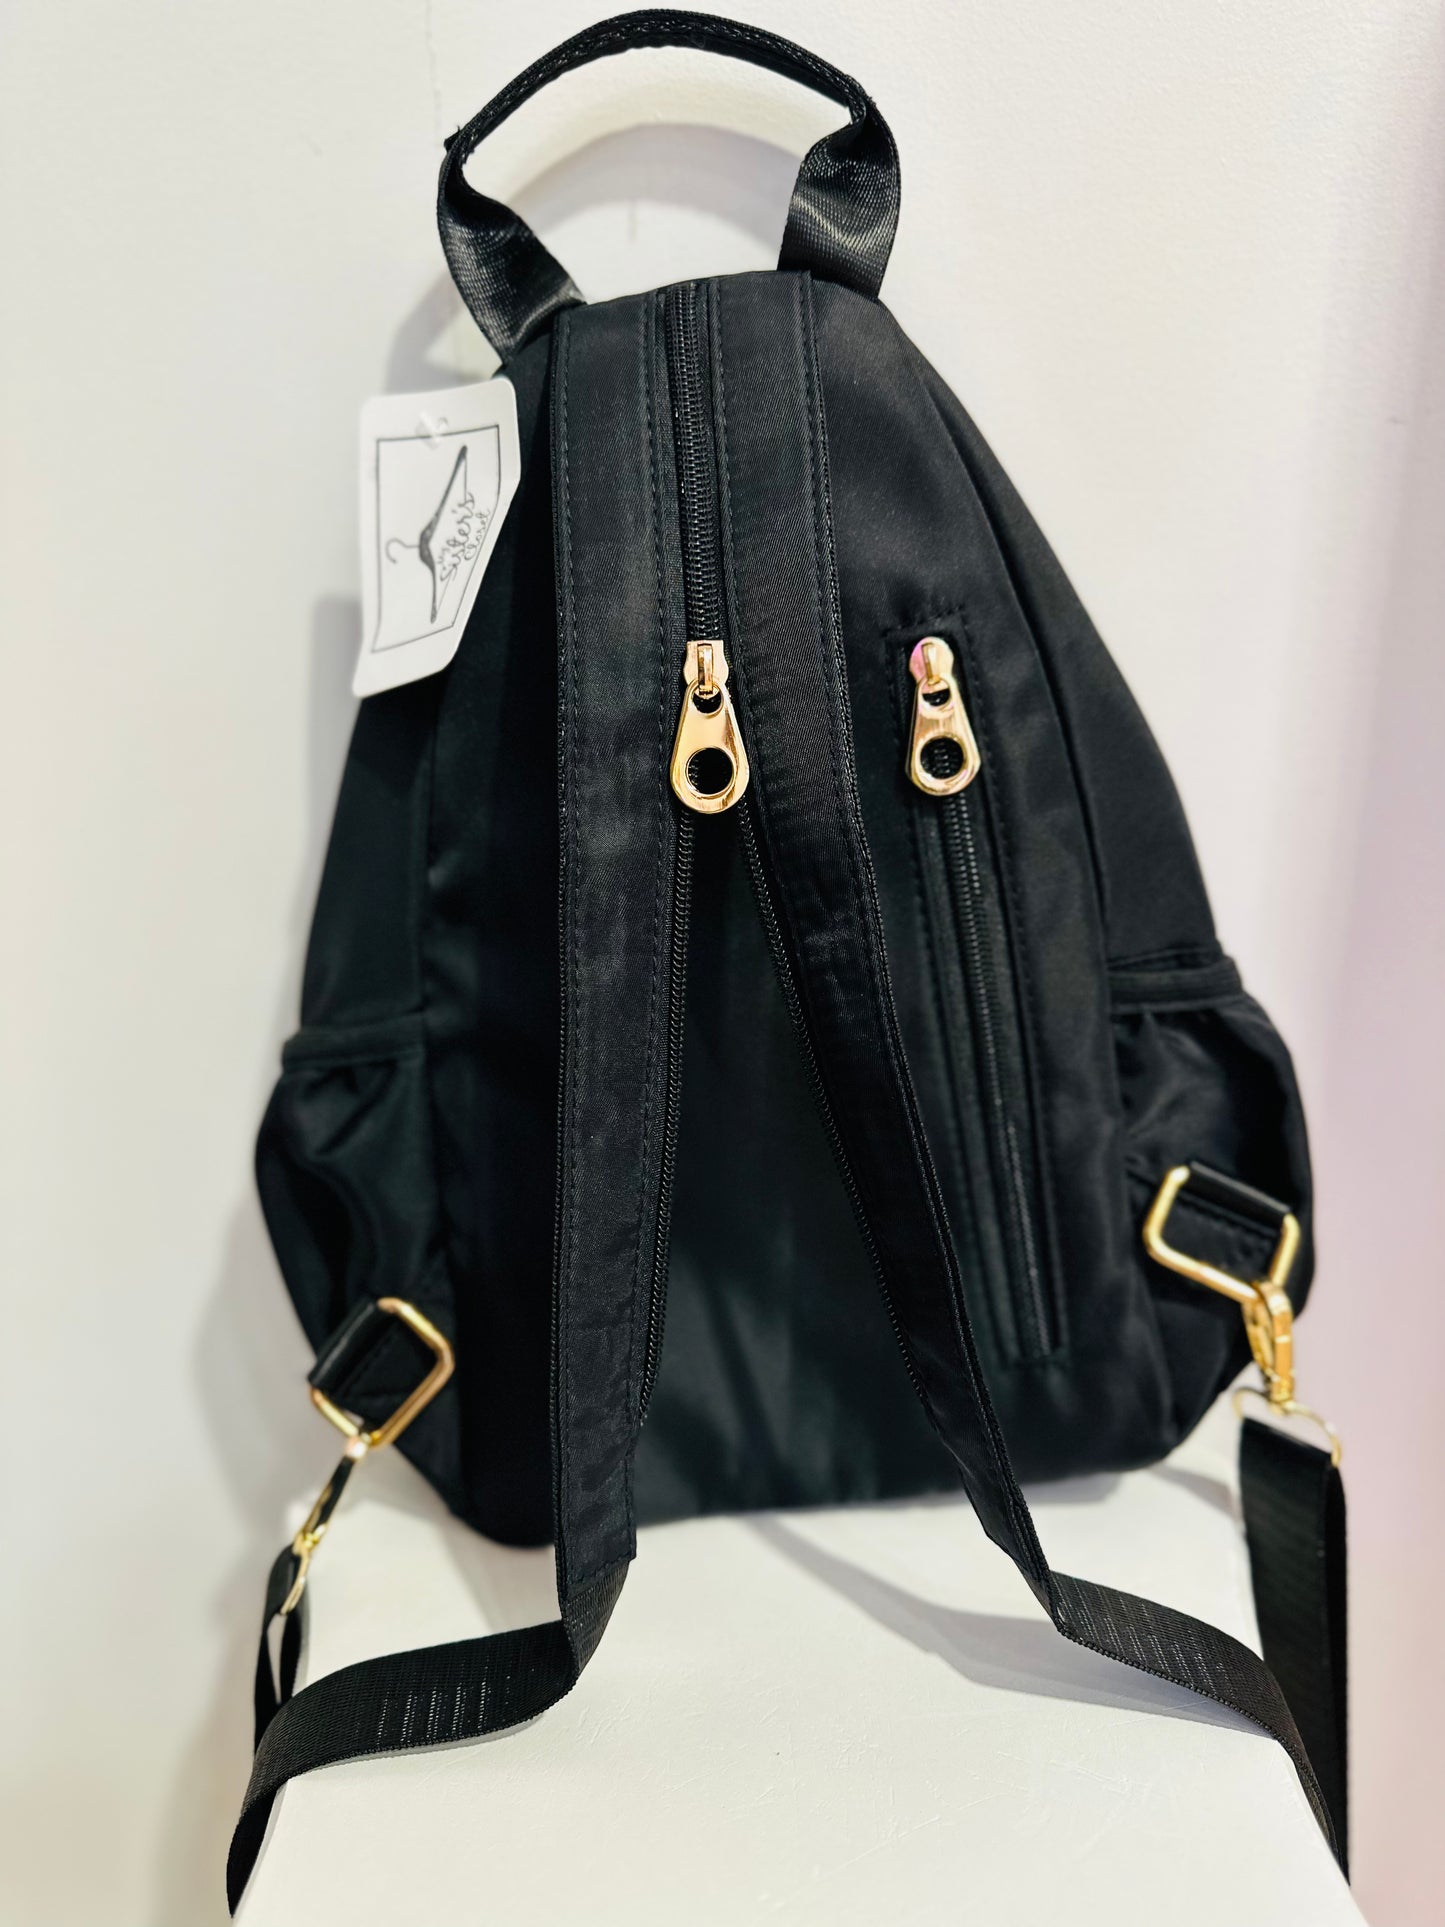 Adjustable Cross Body Back Pack Handbag